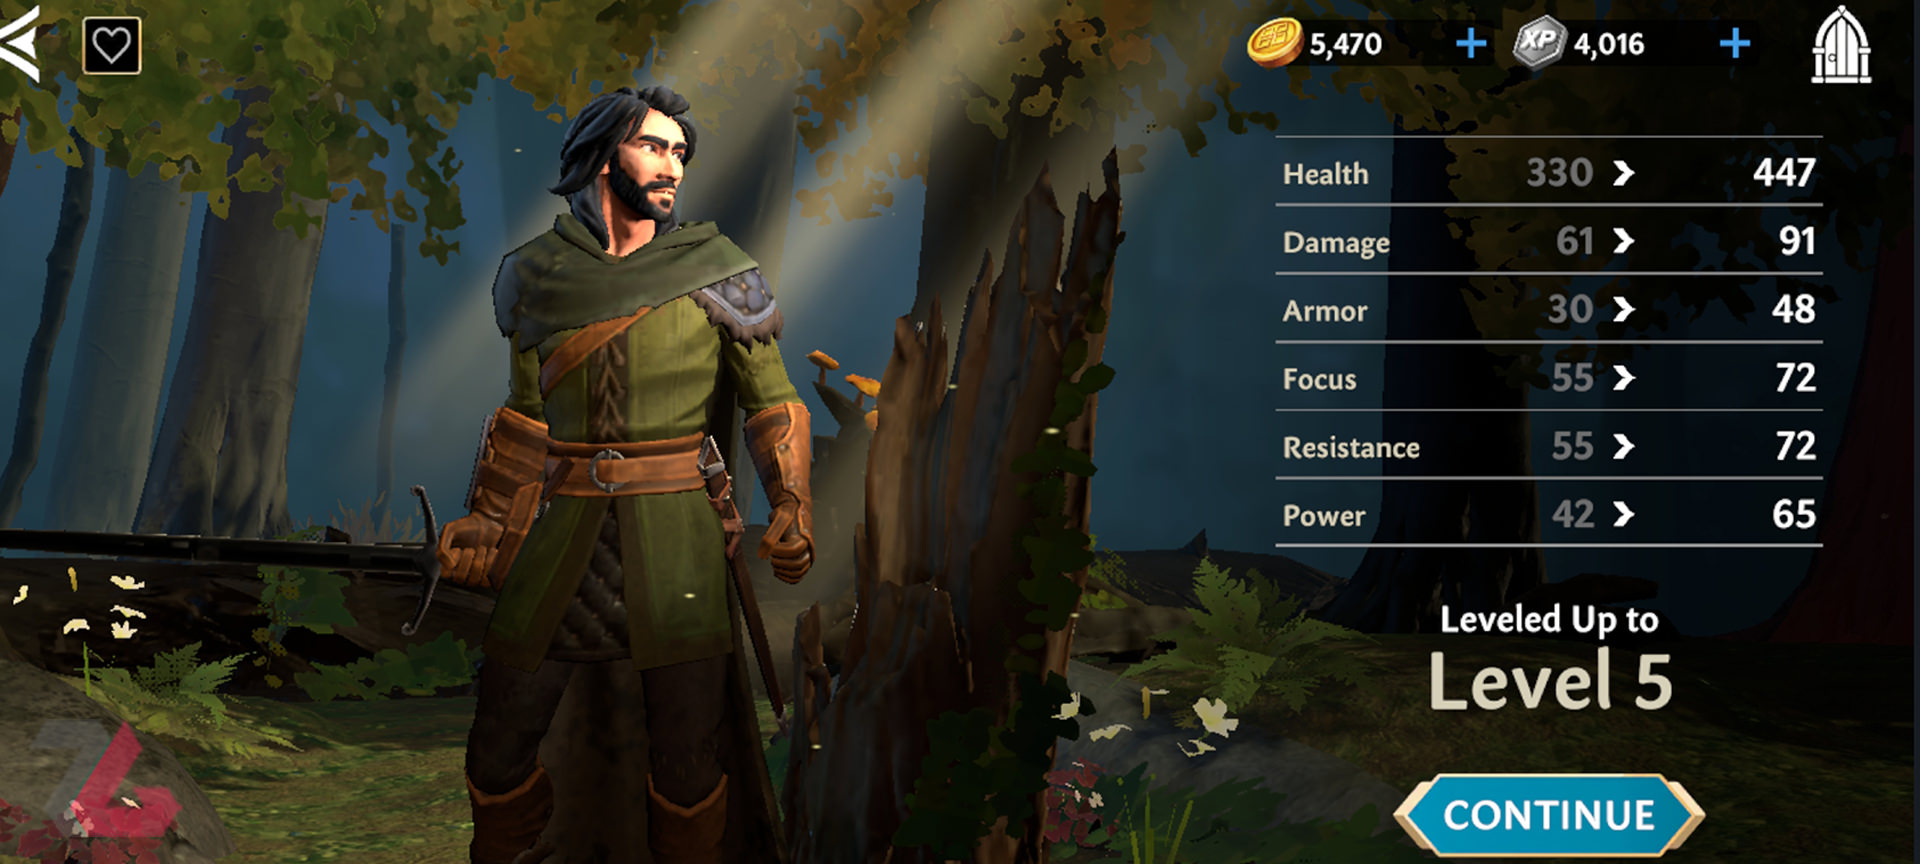 جزئیات کاراکتر در بازی LotR: Heroes of Middle-earth